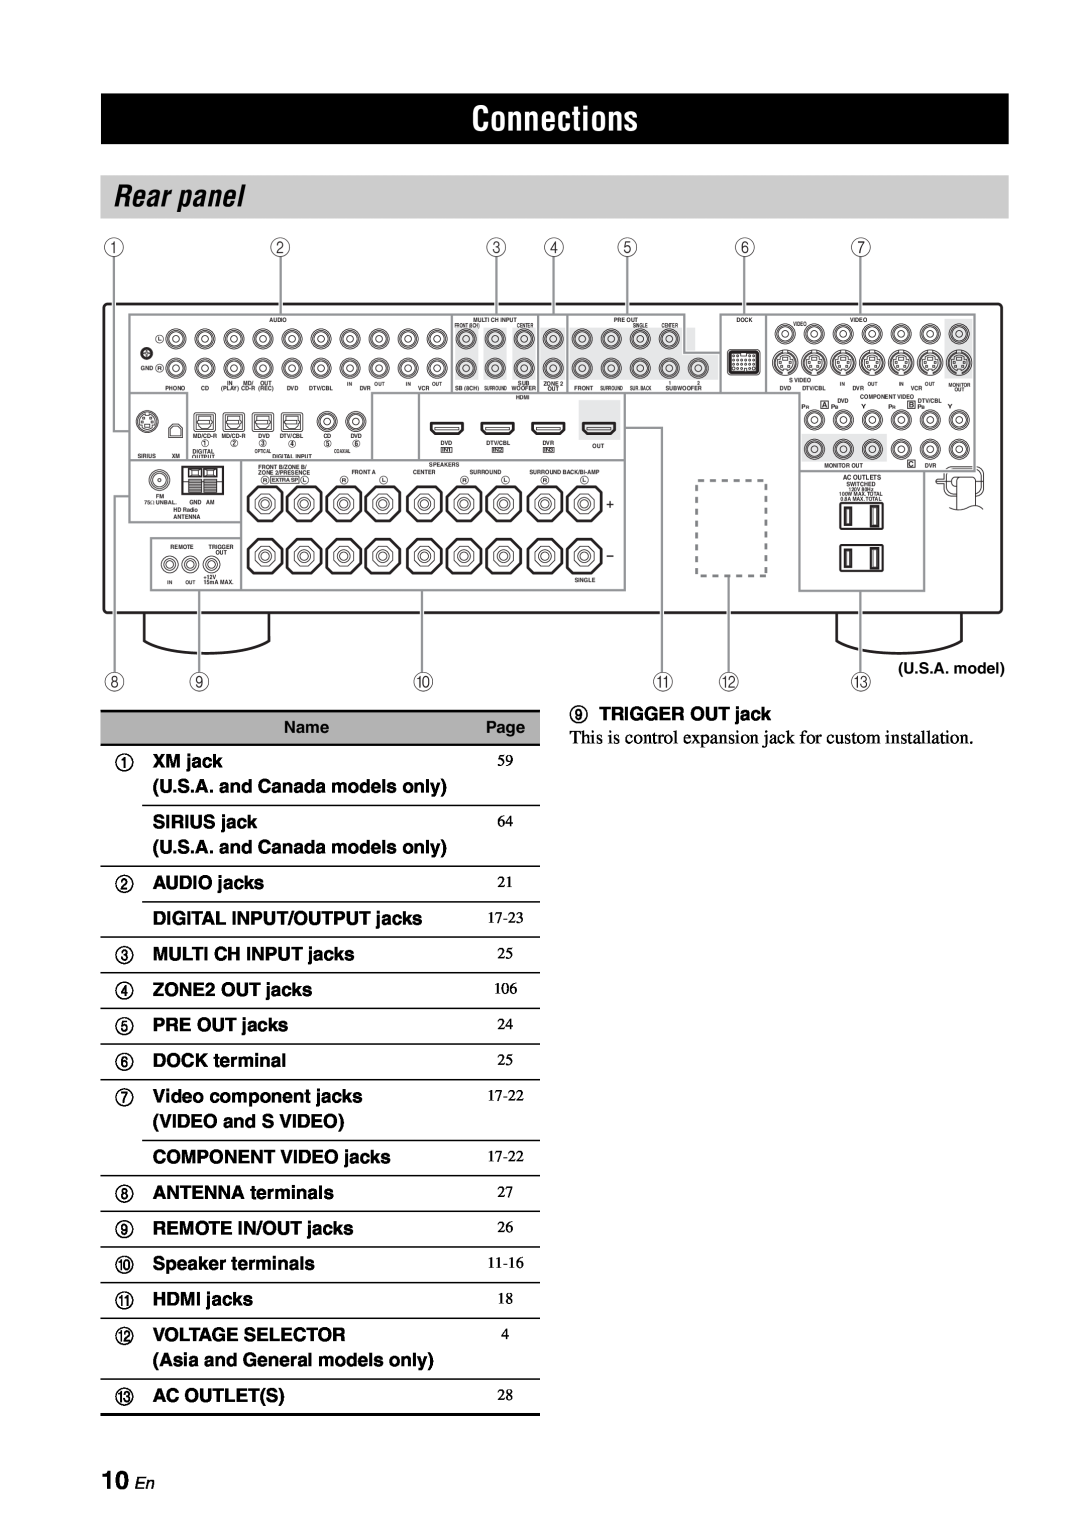 Yamaha RX-V863 owner manual Connections, Rear panel, 10 En 